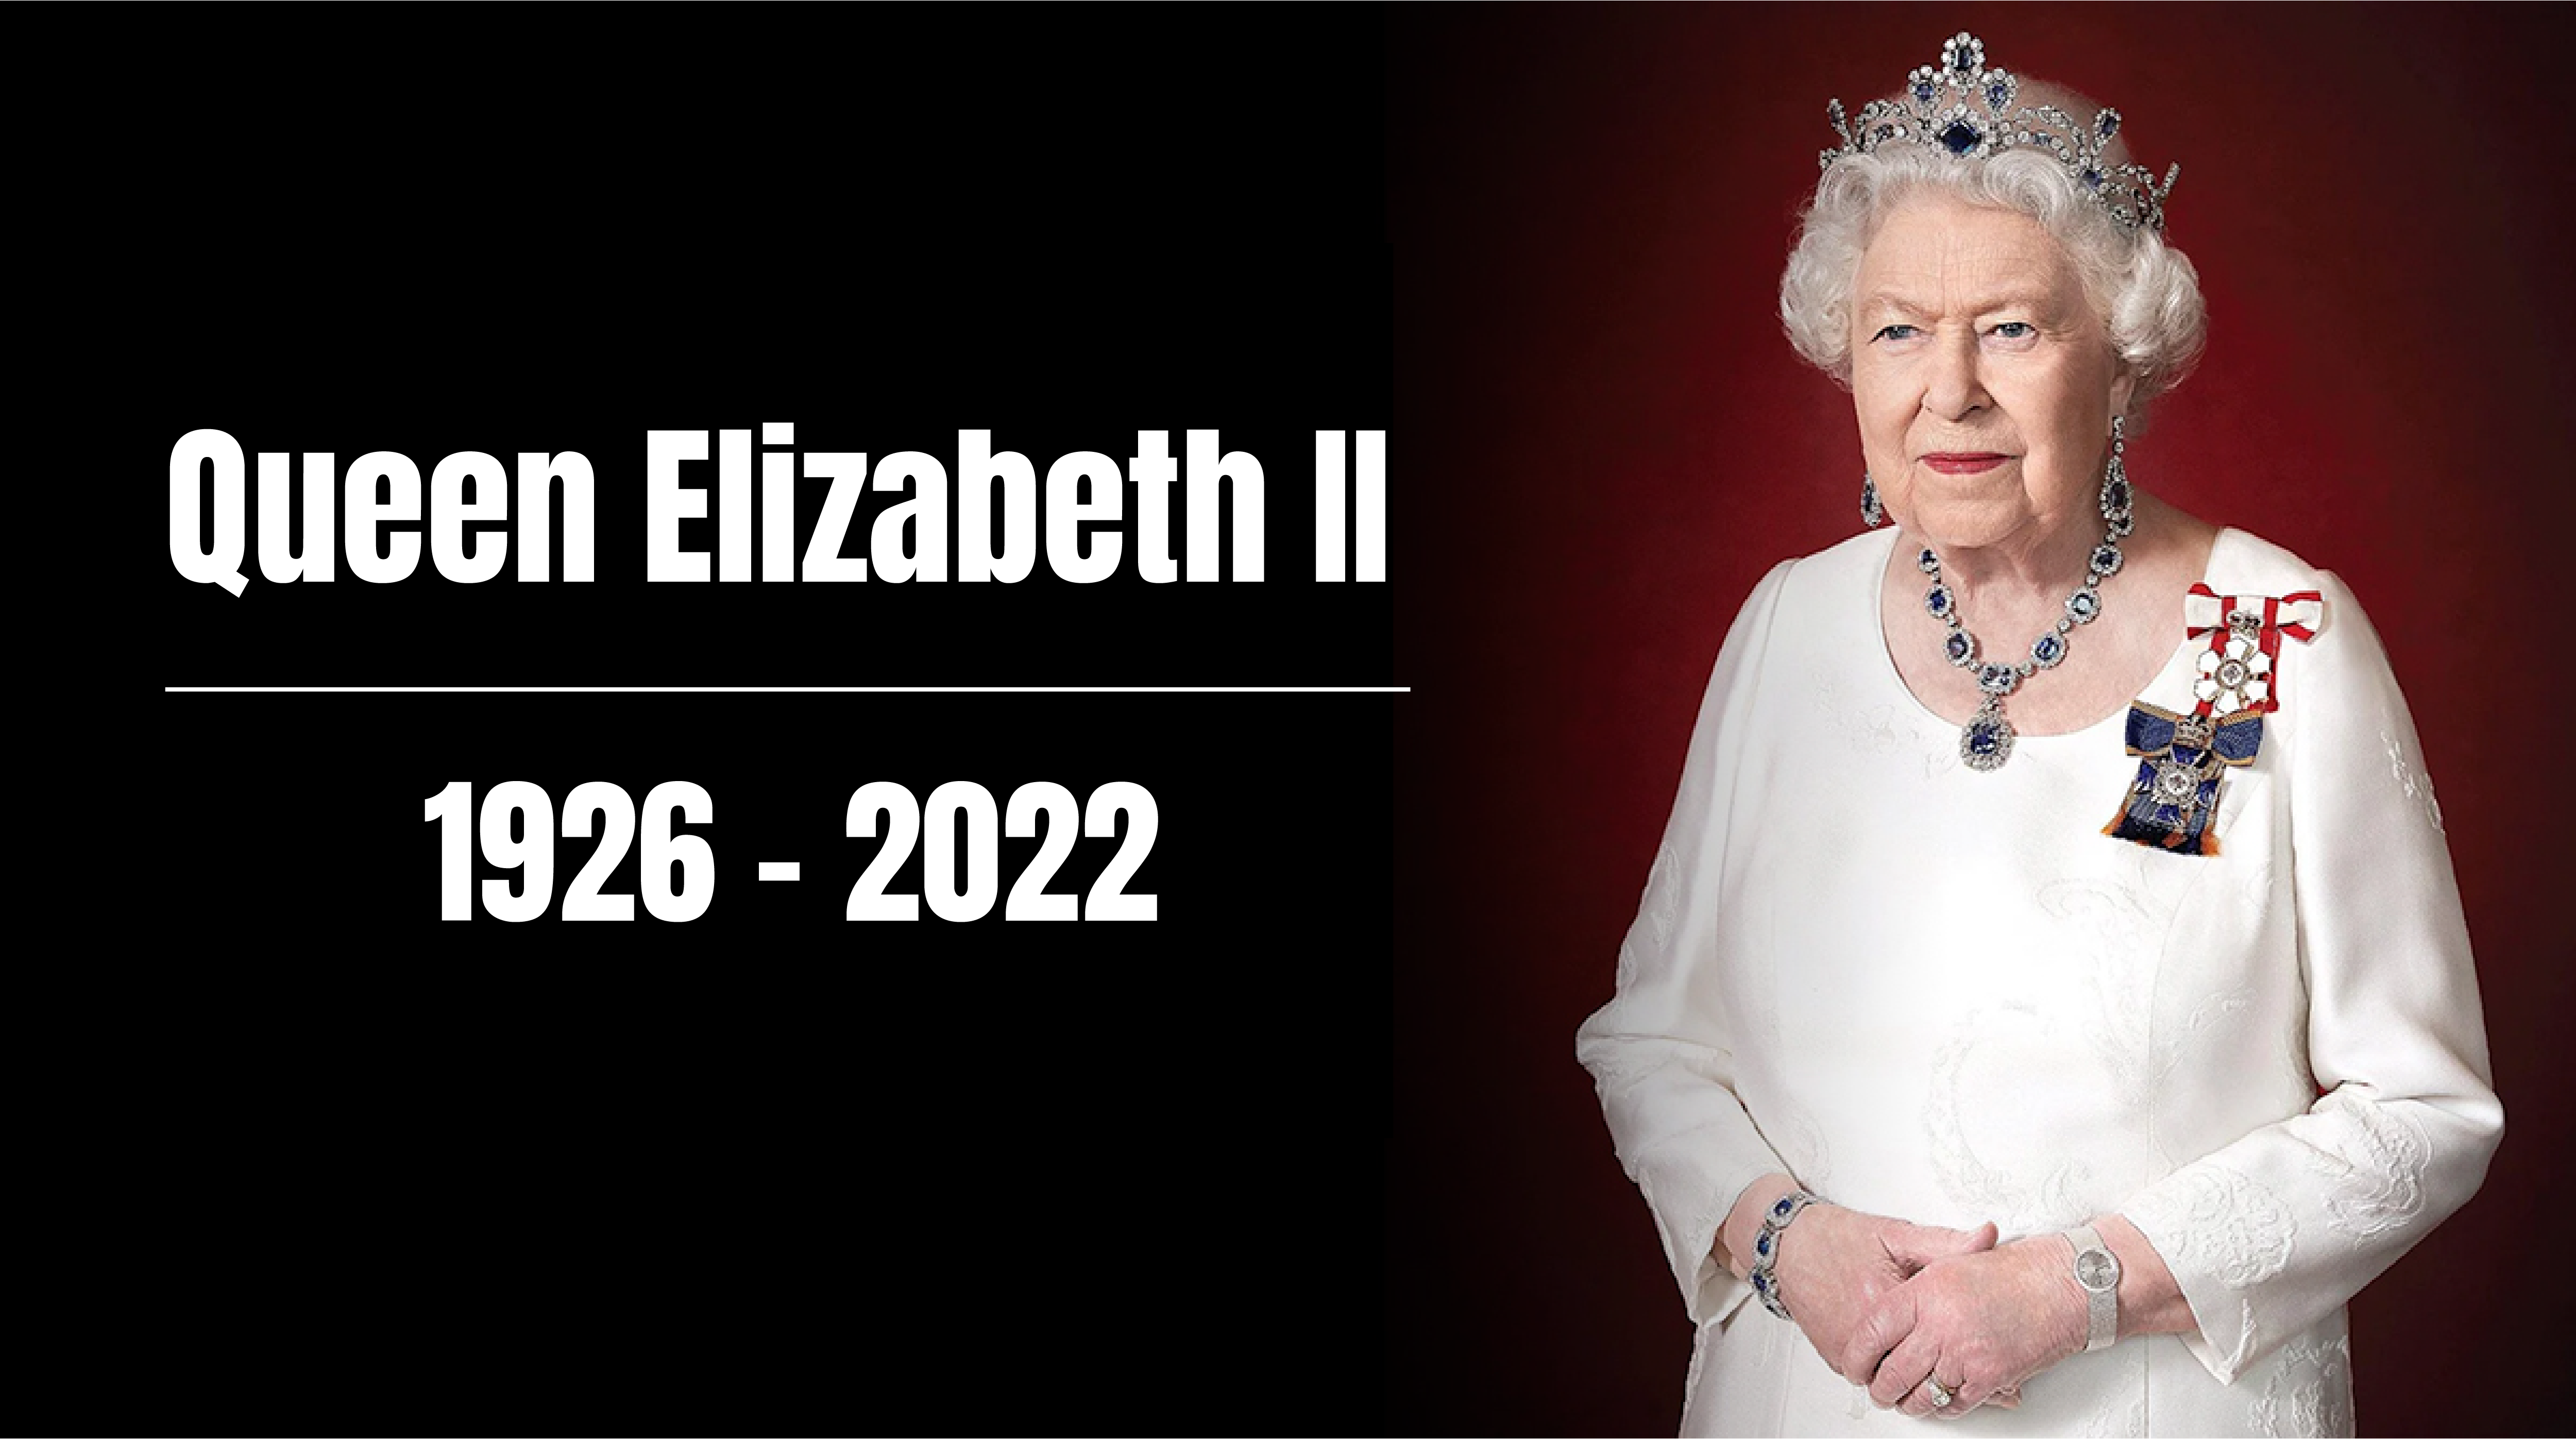 Photo of the Queen with text reading ' Queen Elizabeth II, 1926-2022'